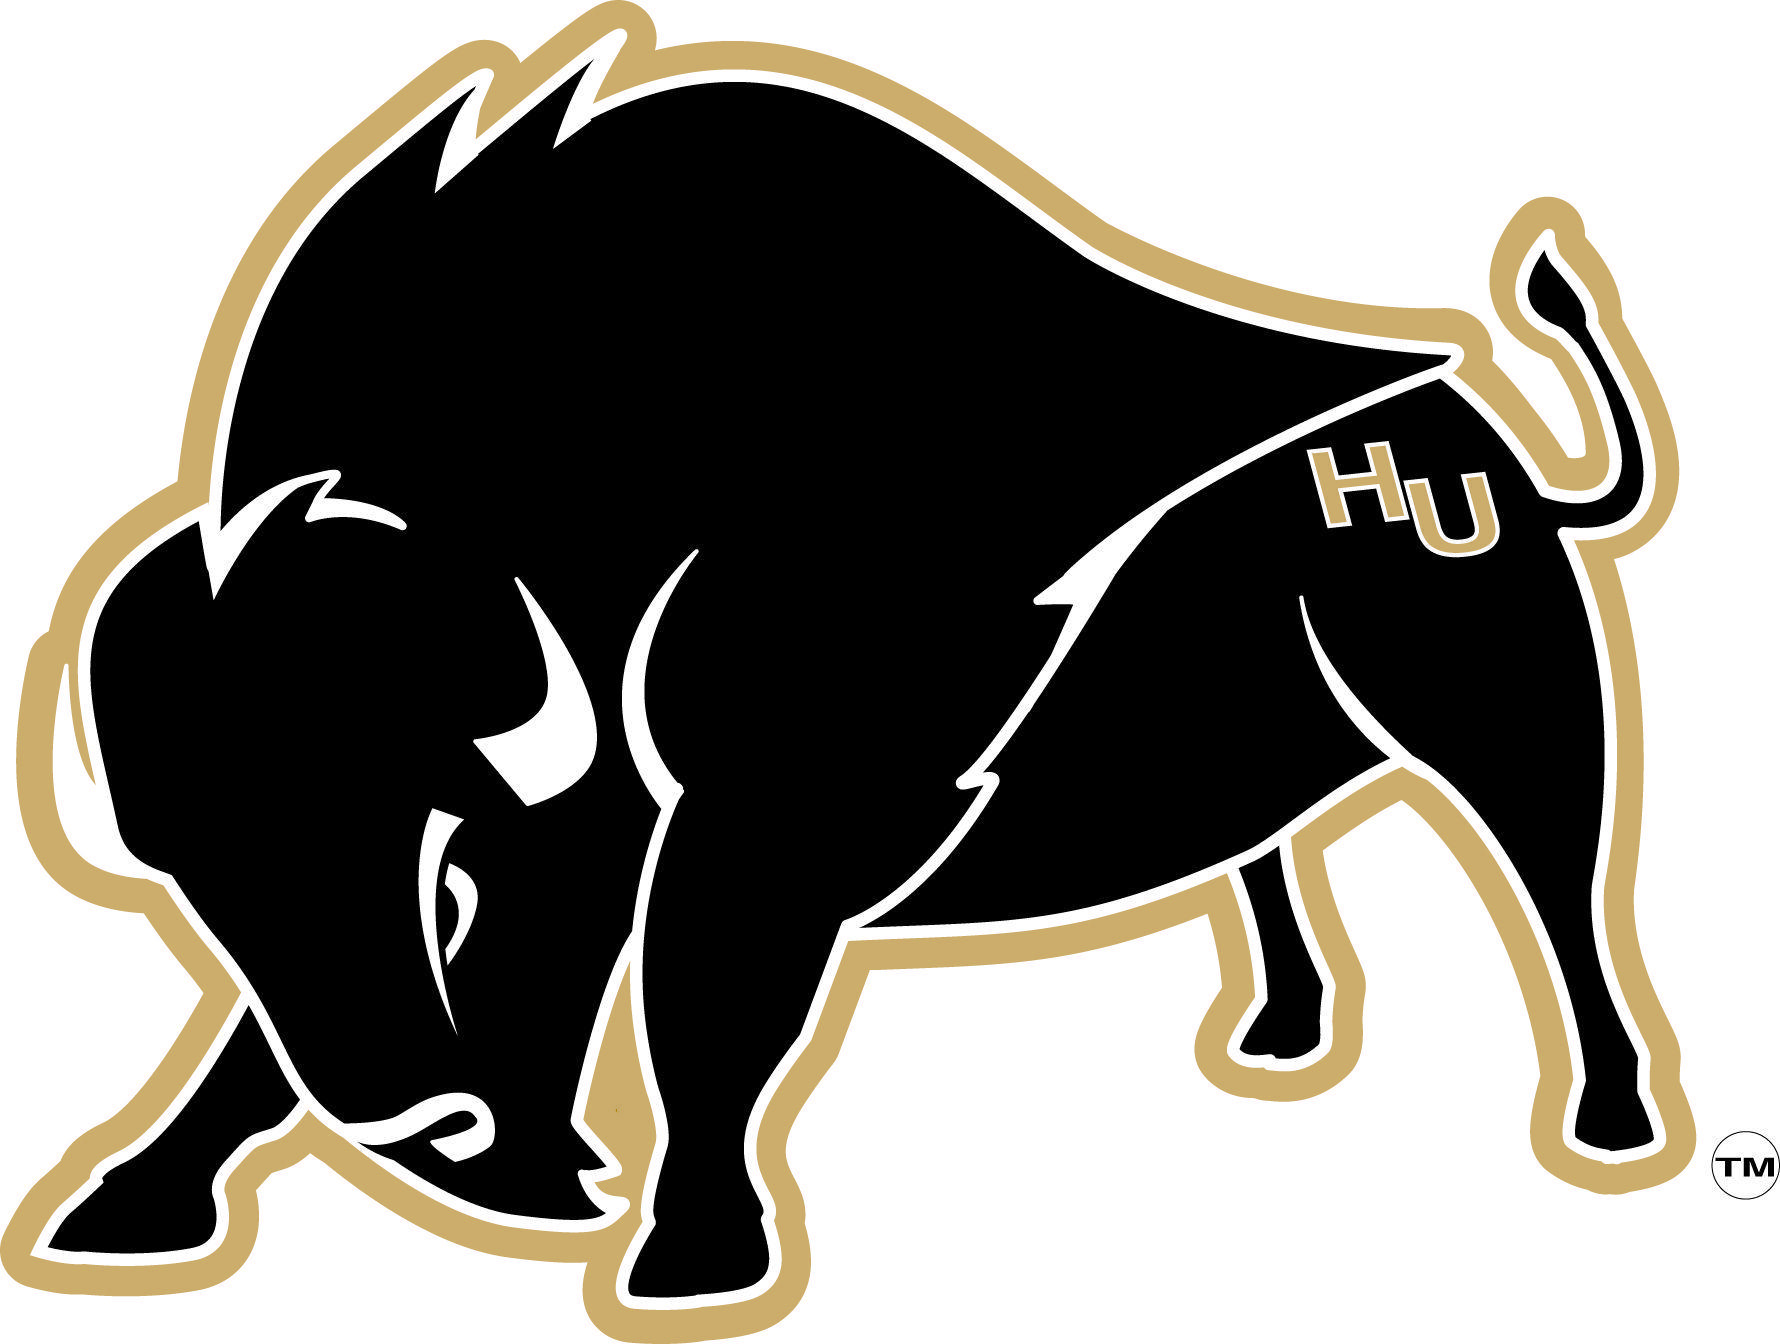 Bison Mascot Logo - Harding University- Bison | College mascots and logos | Pinterest ...